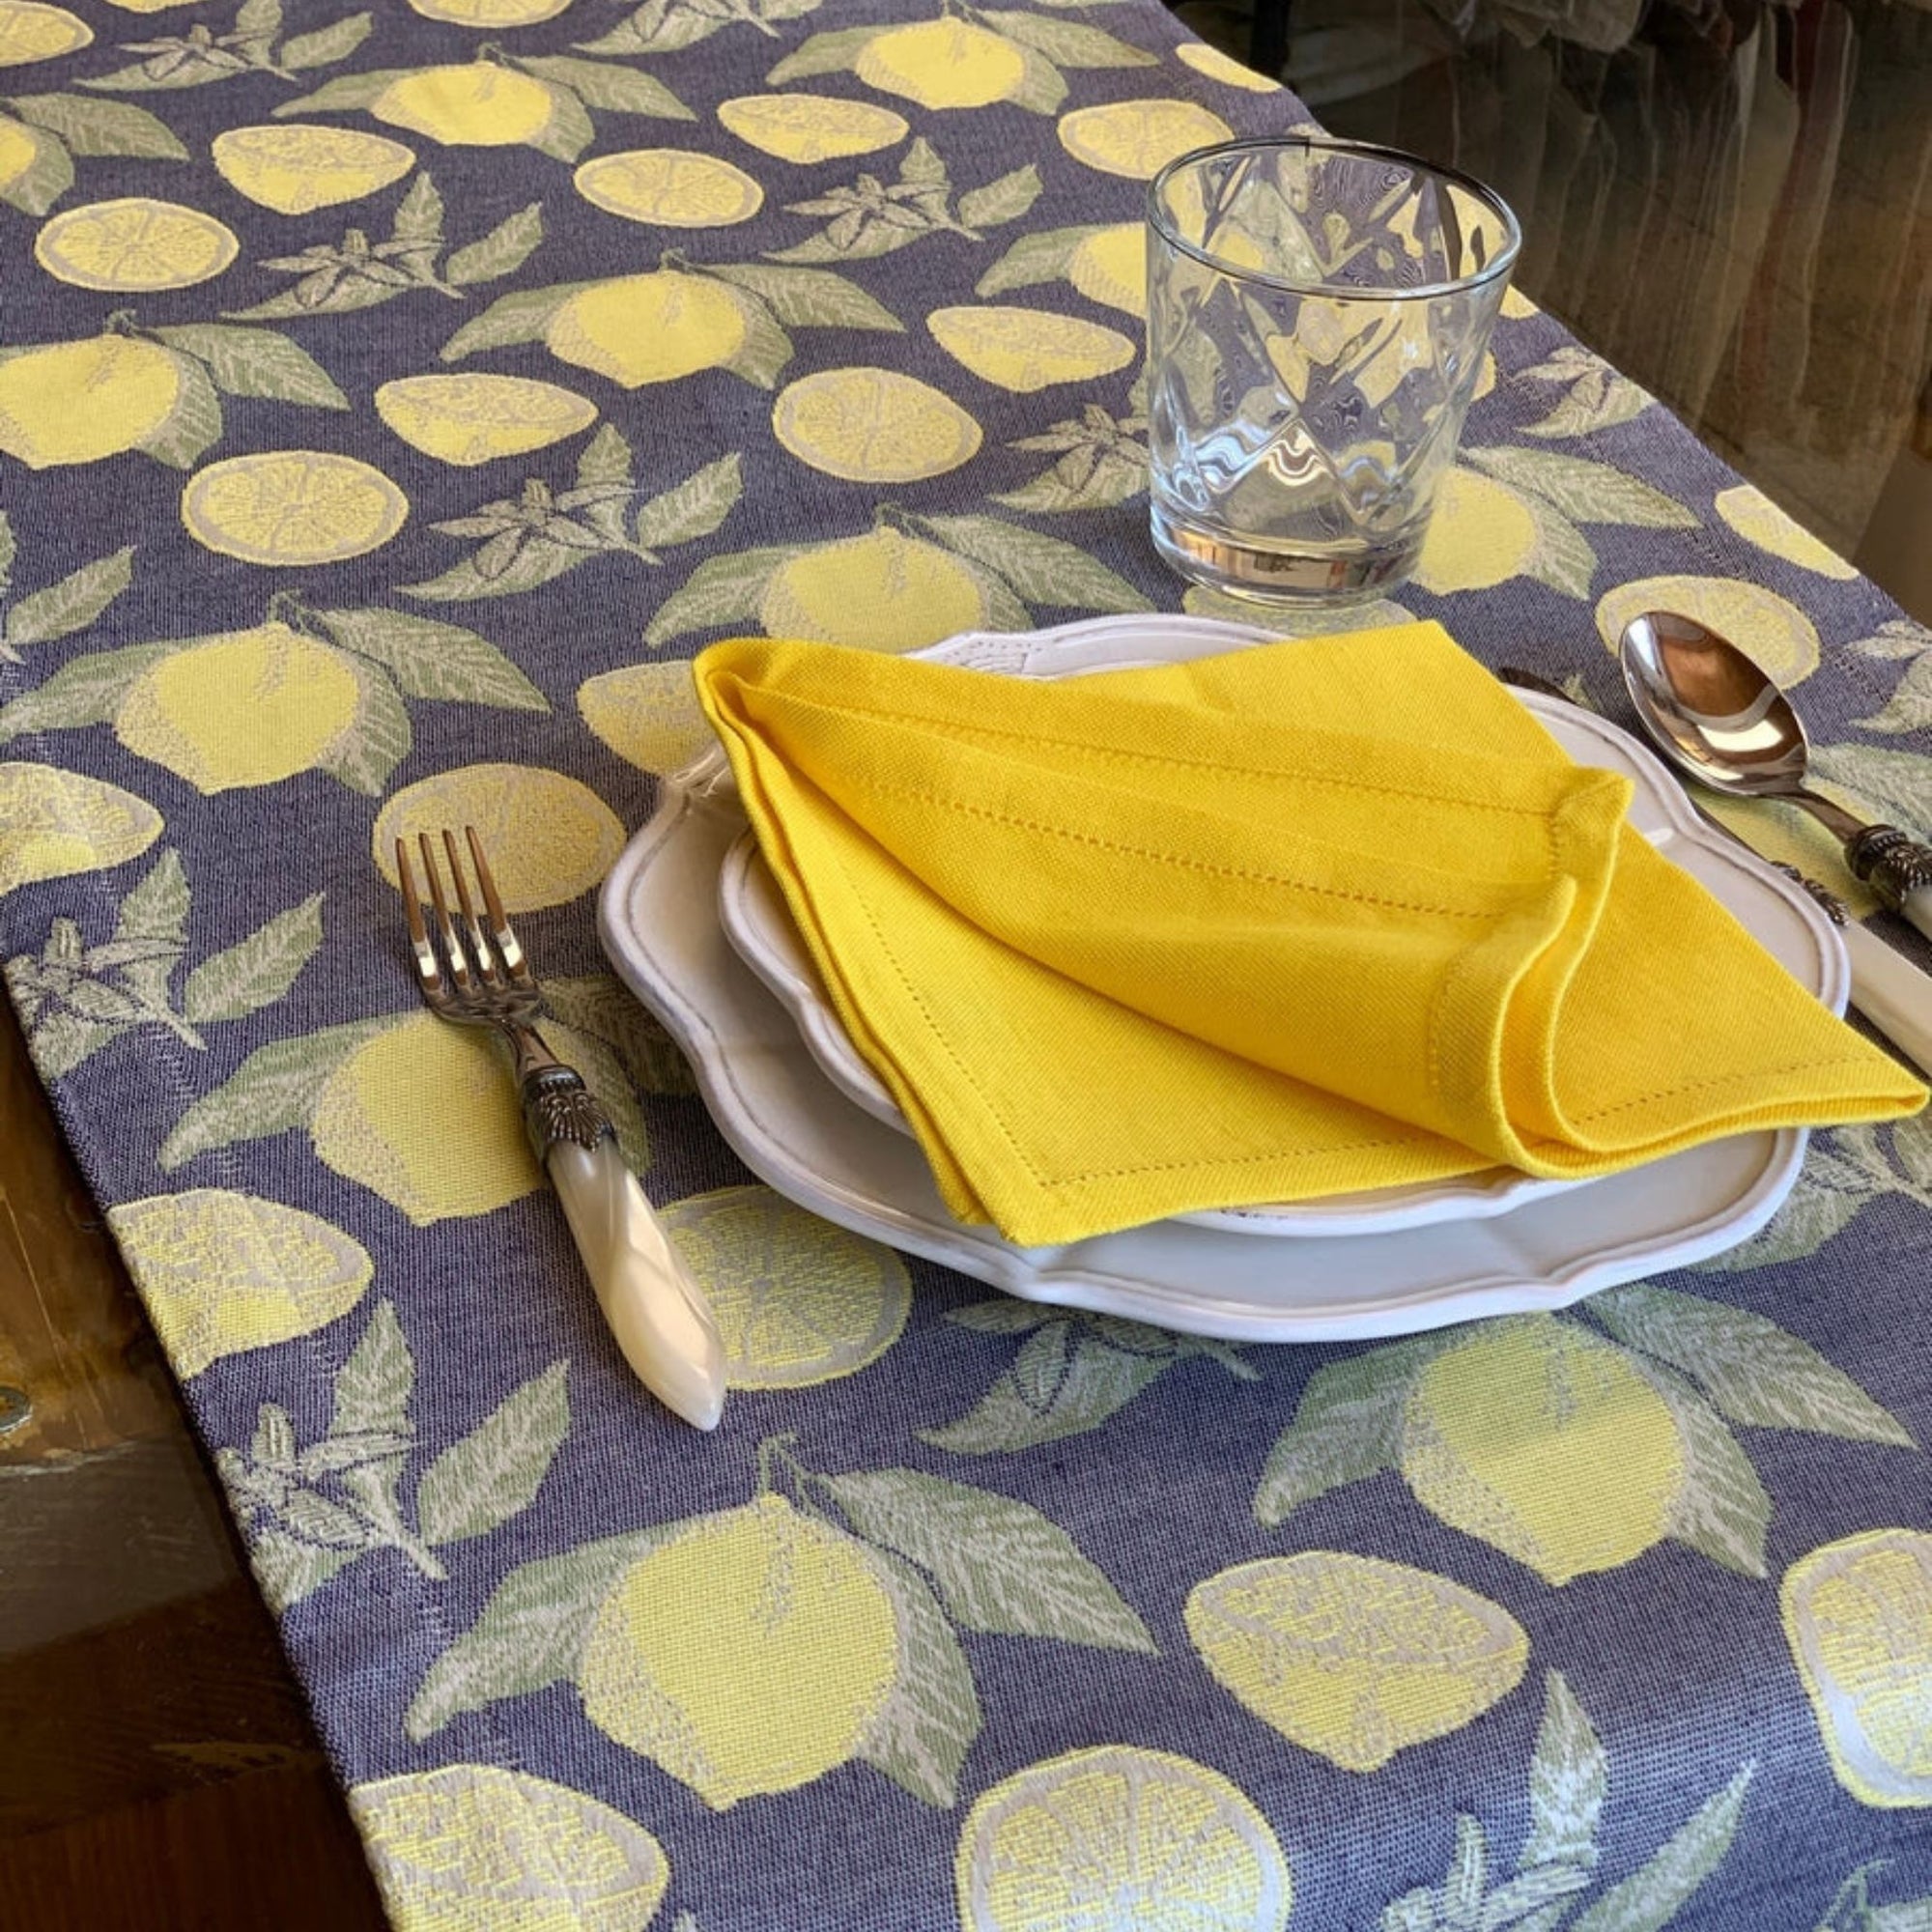 Busatti Lemon Table Runner, Made in Italy - My Italian Decor